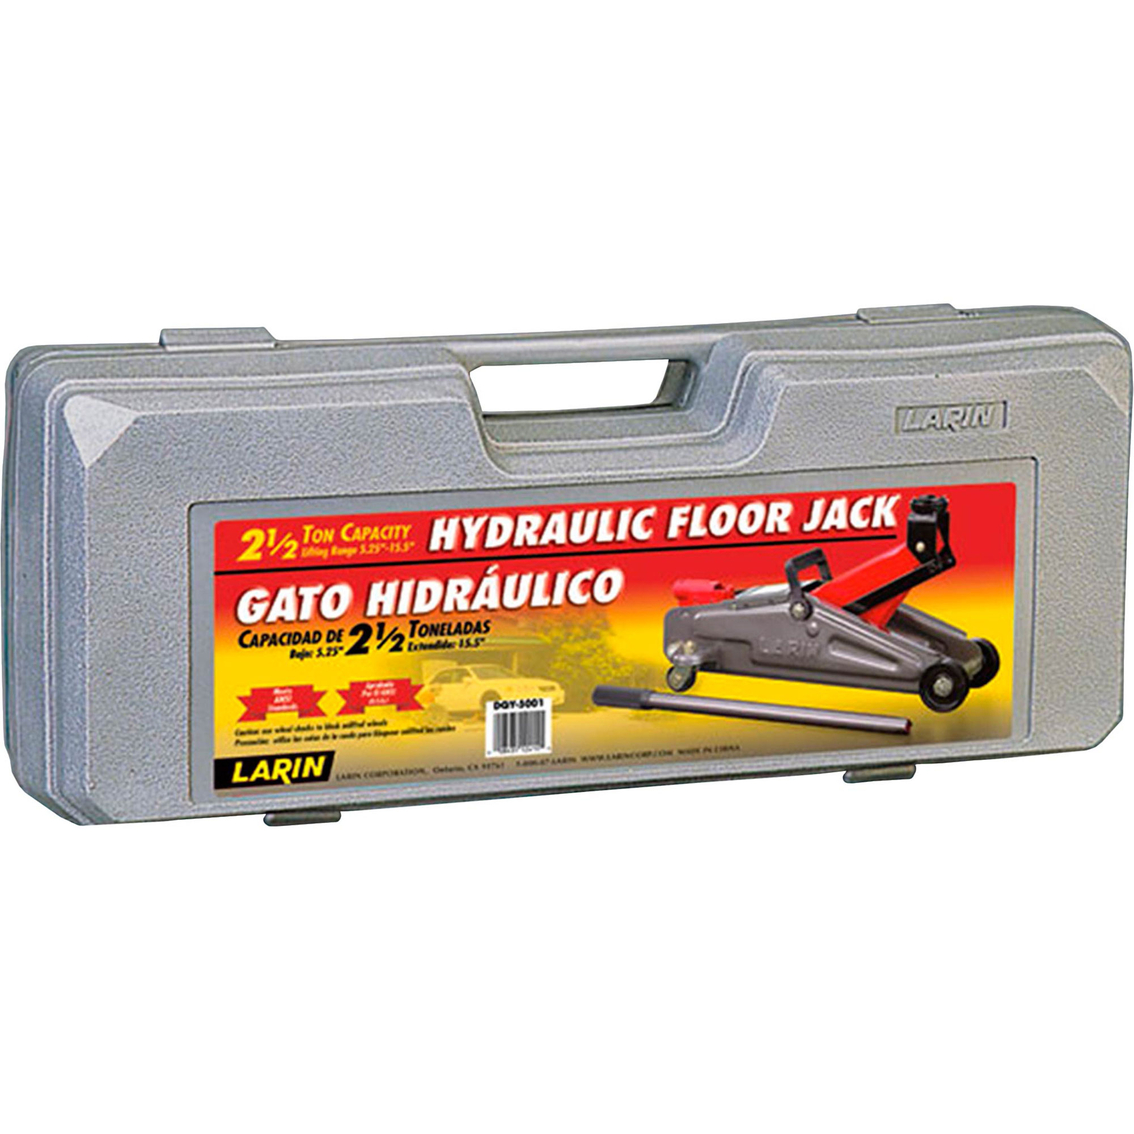 Larin 2 5 Ton Hydraulic Floor Jack With Case Jacks Accessories Patio Garden Garage Shop The Exchange